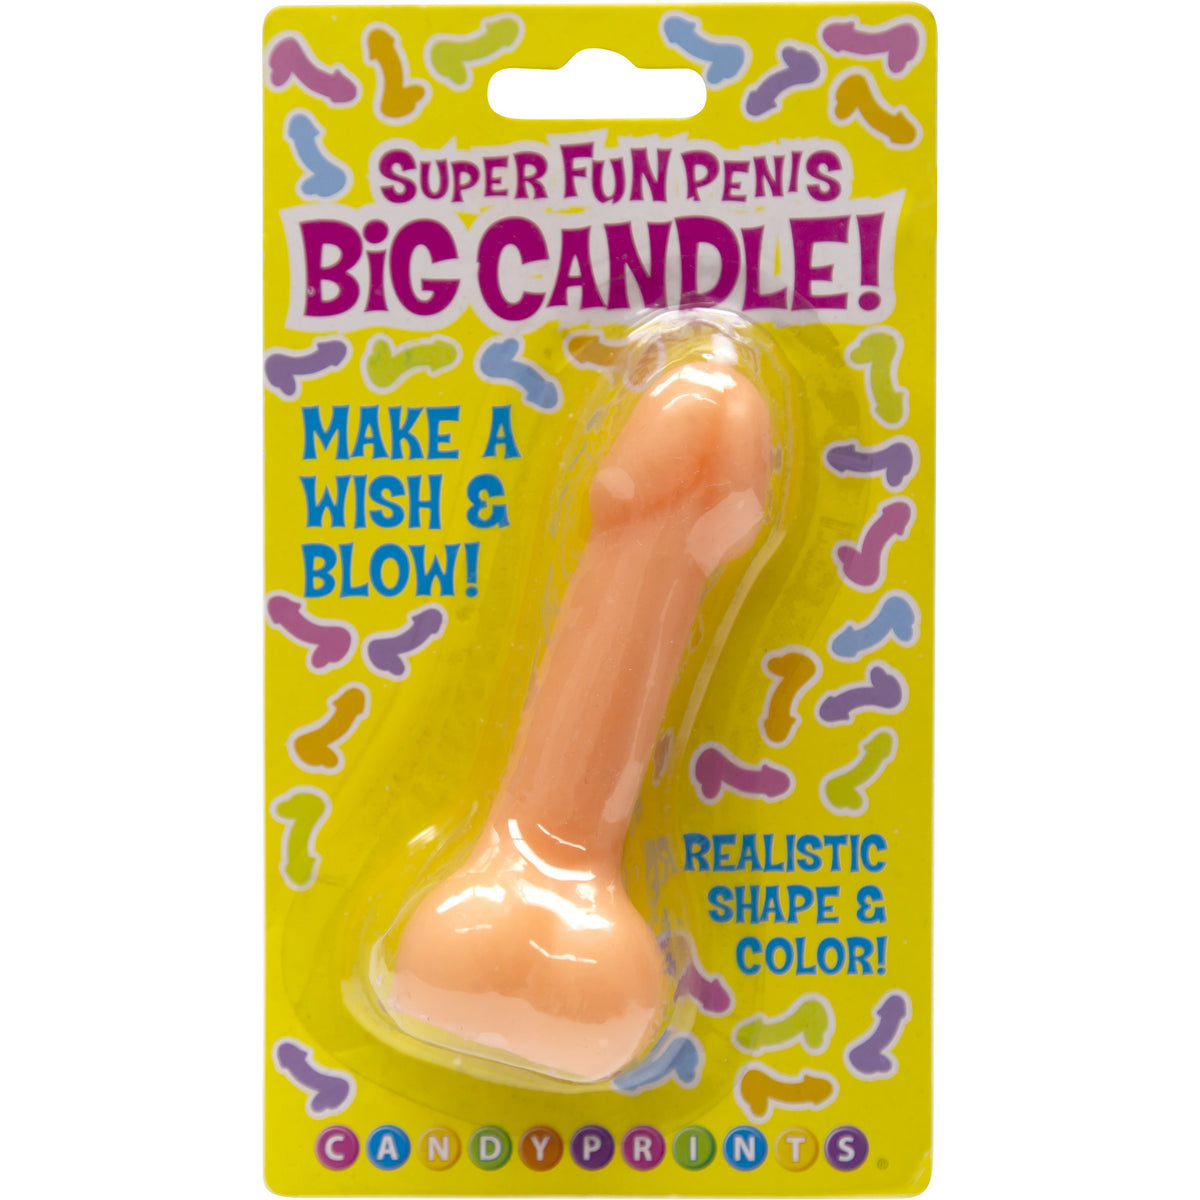 Candyprints Big Penis Candle